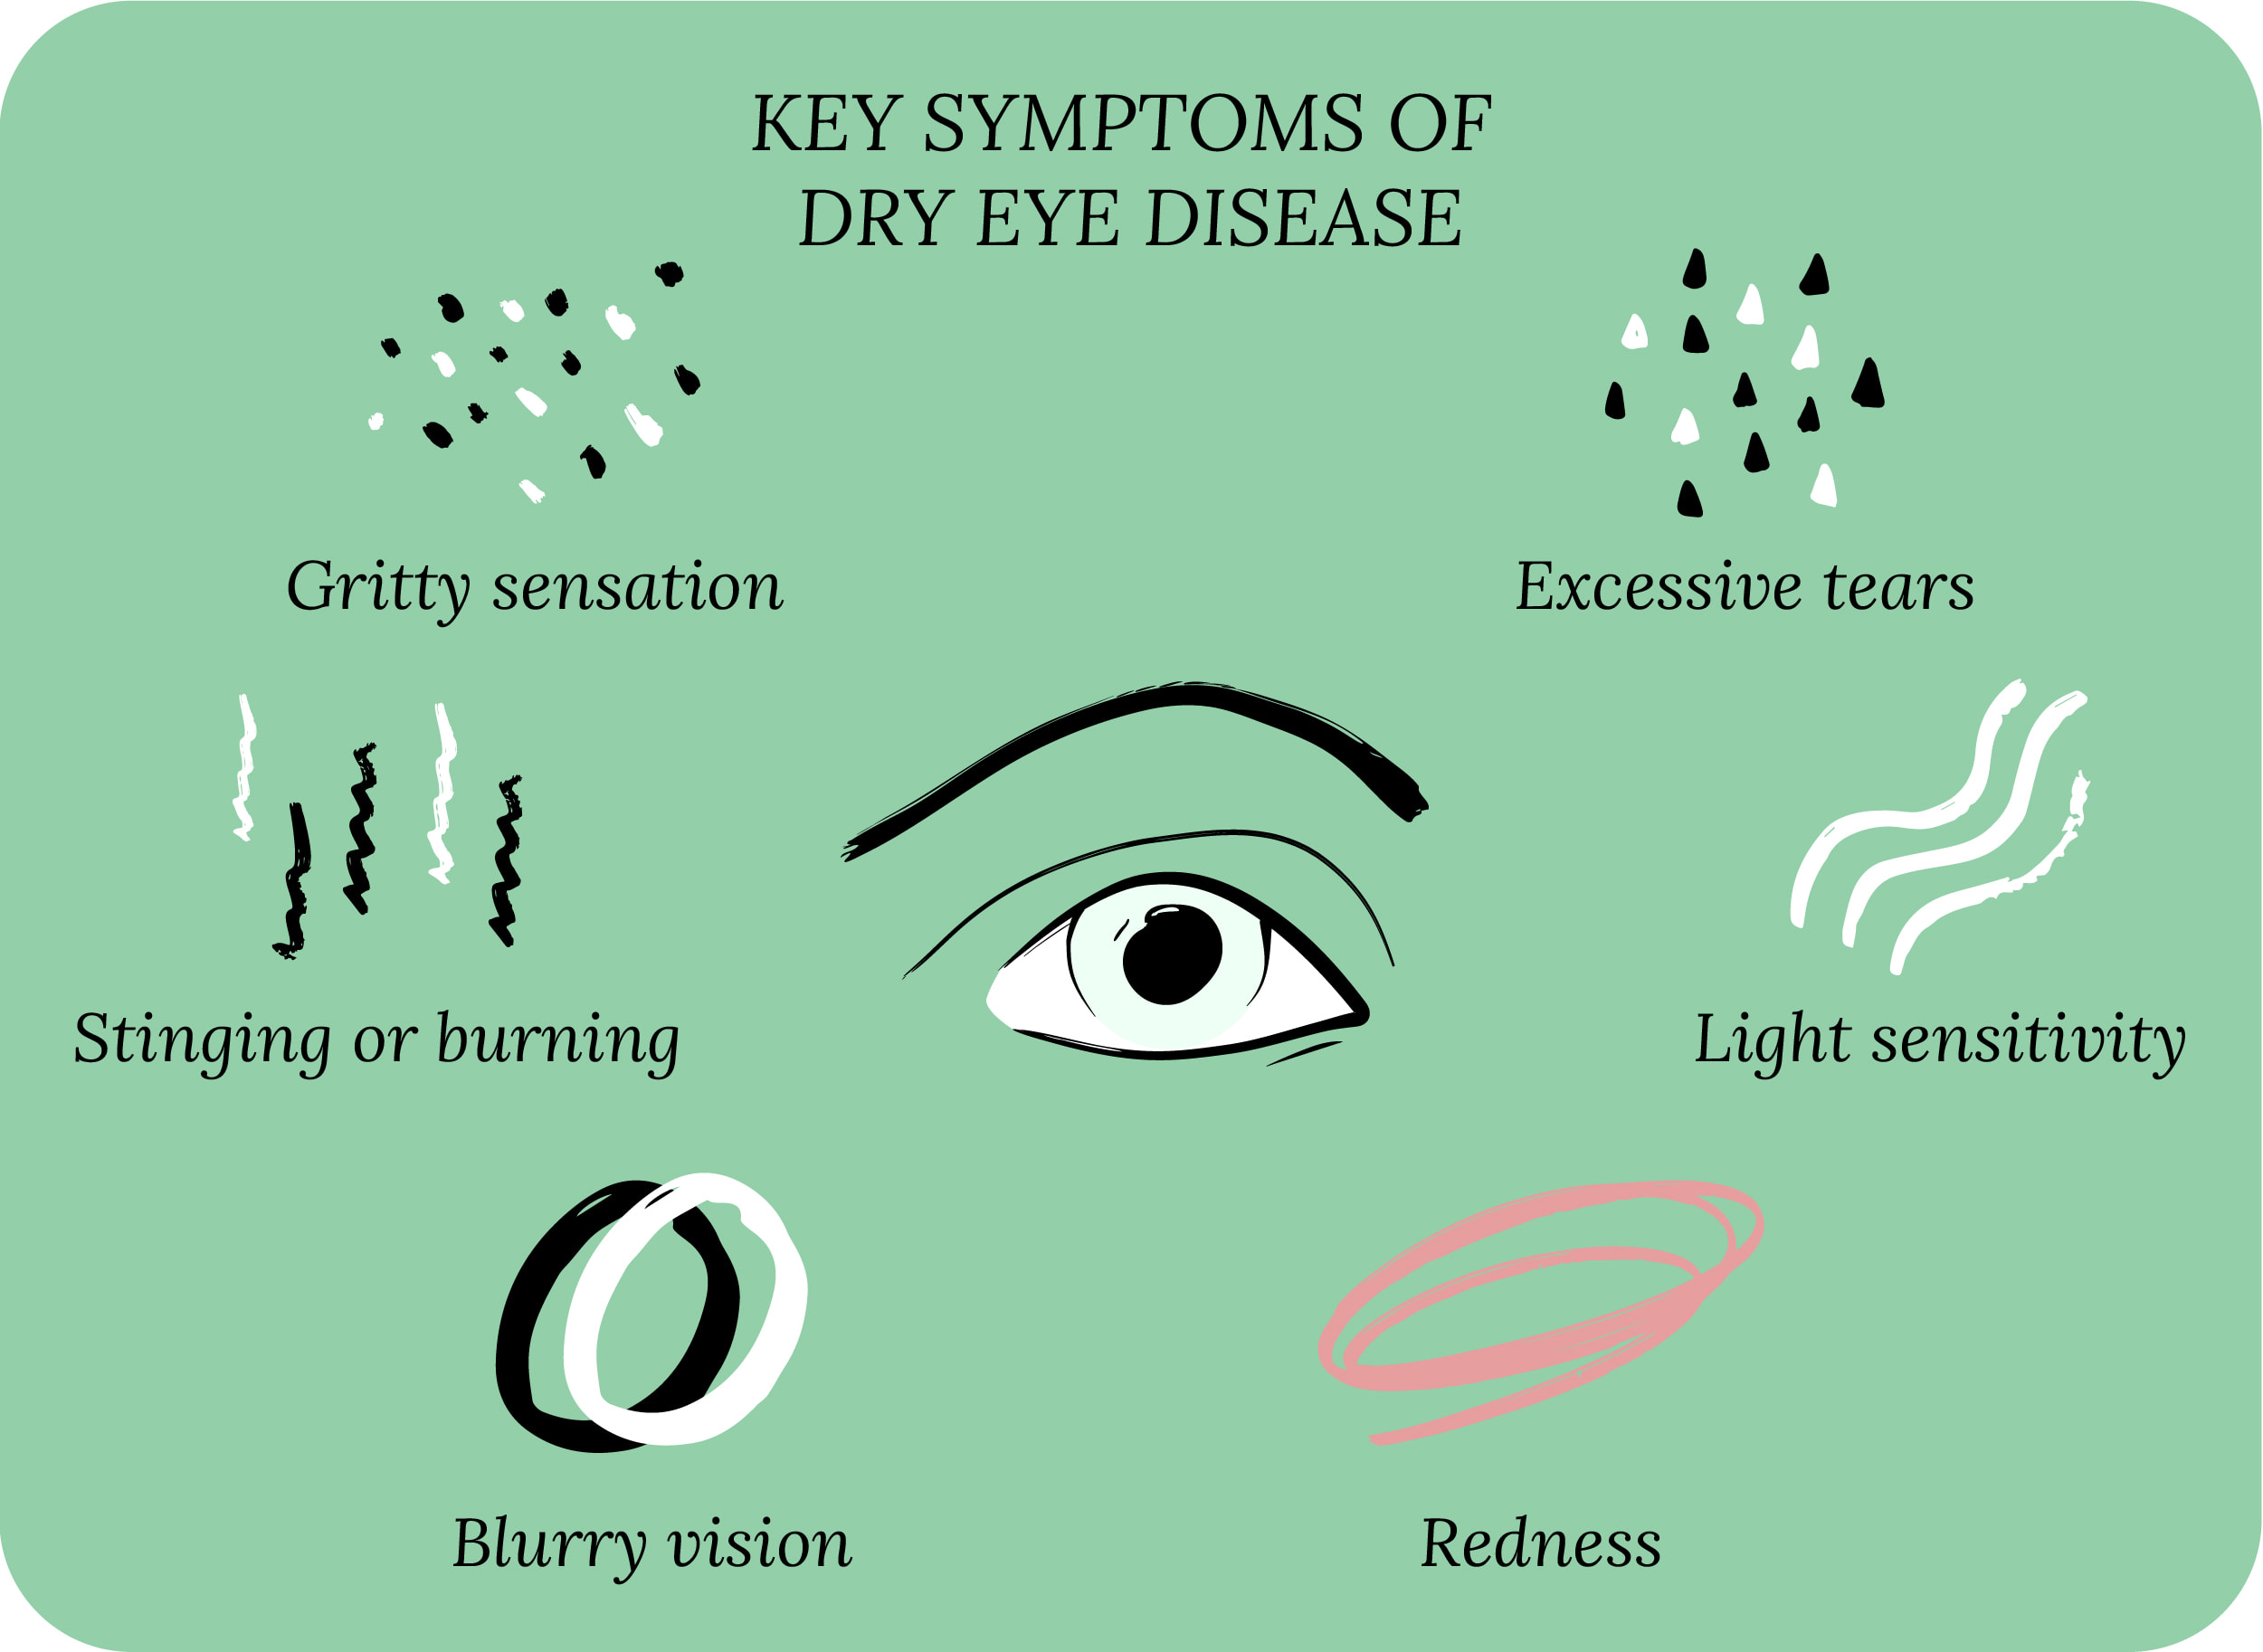 Key symptoms of dry eye disease